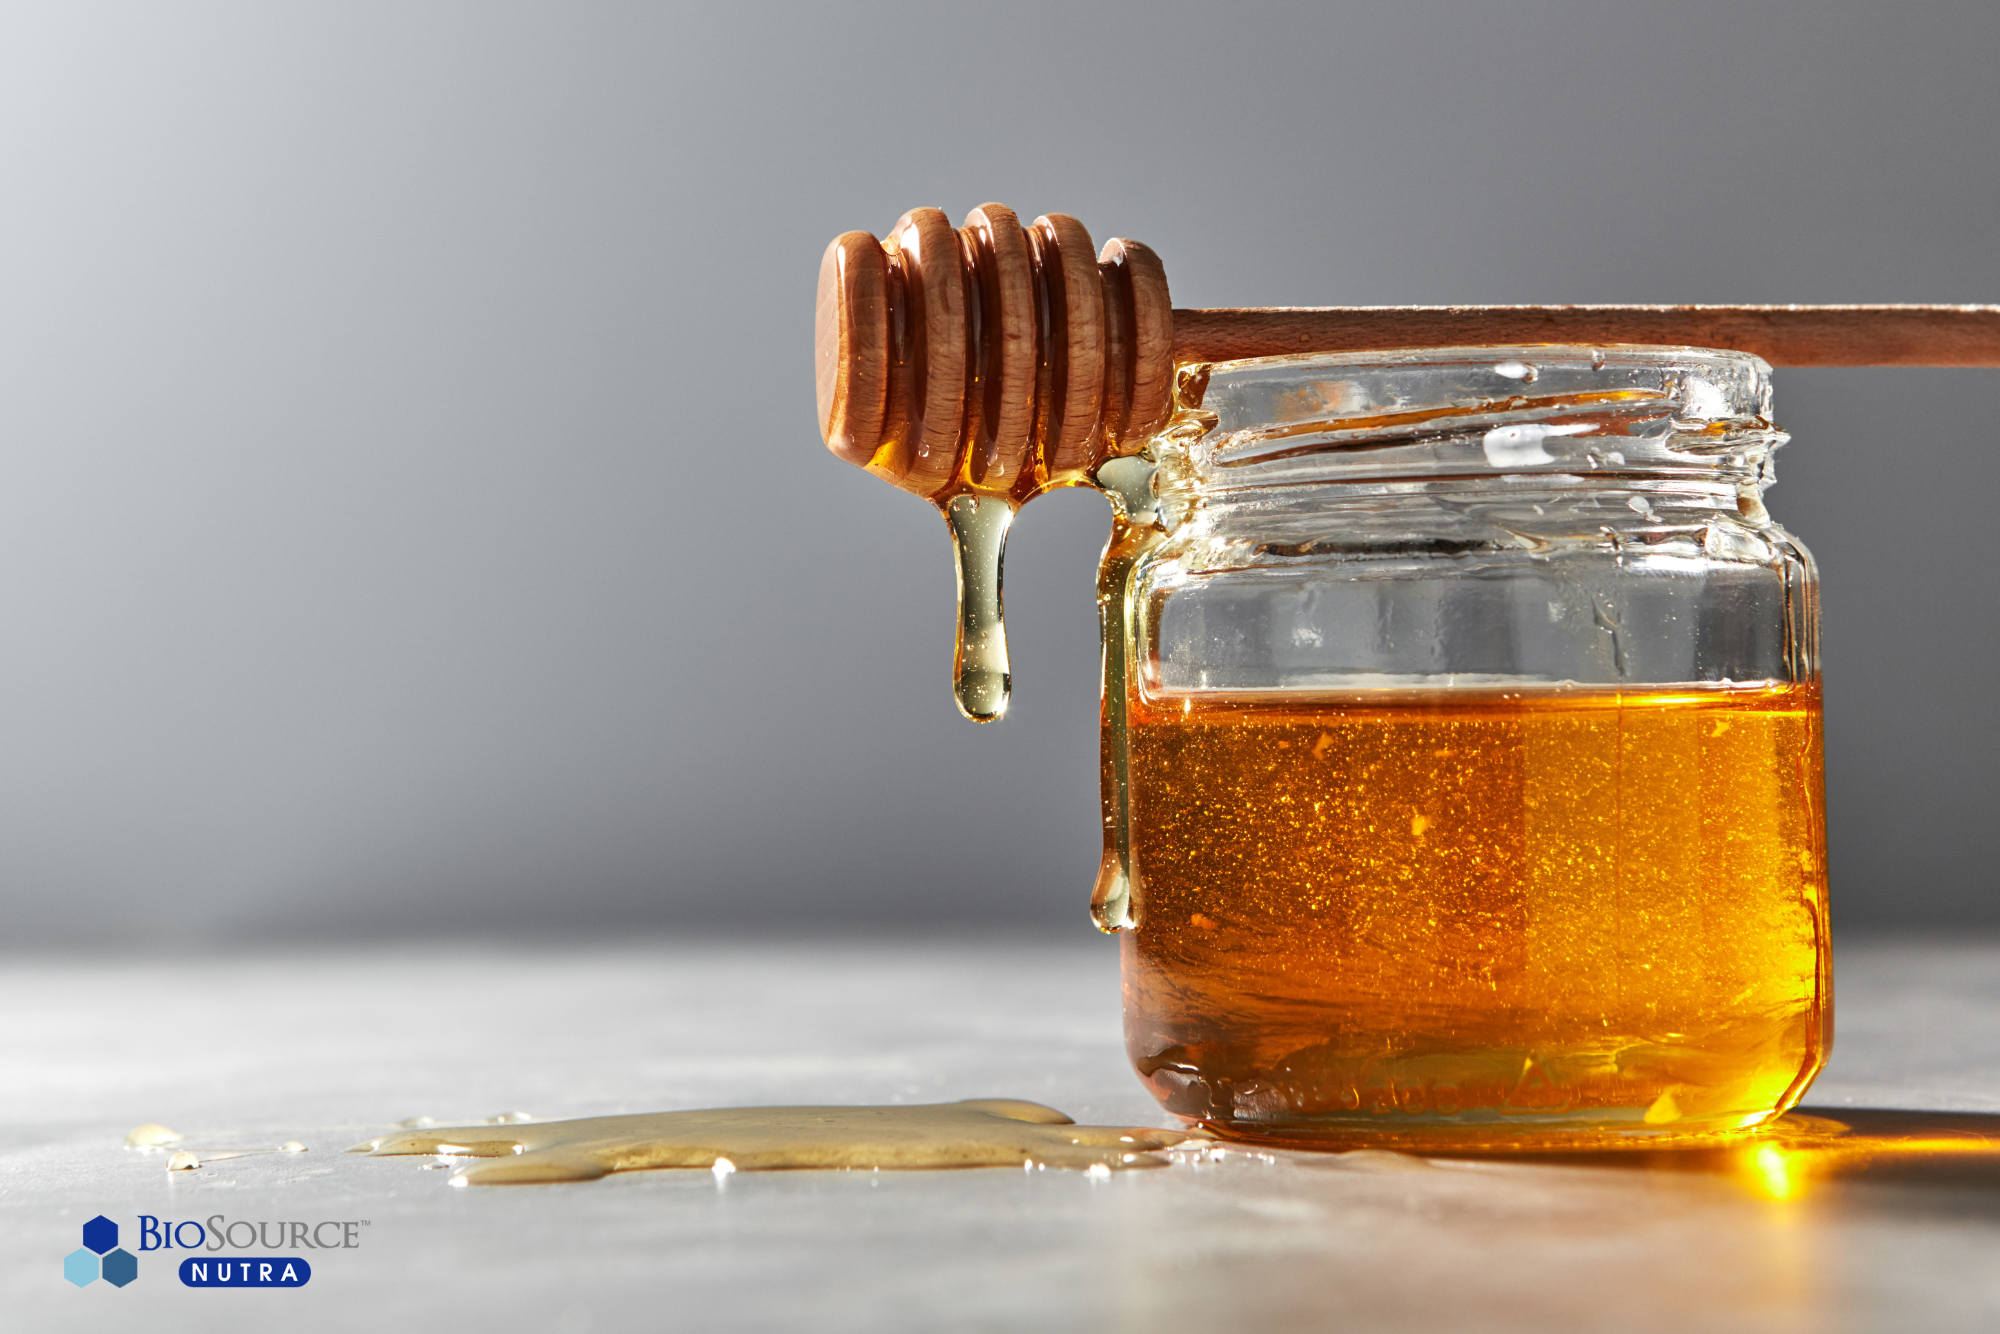 A glass jar of honey